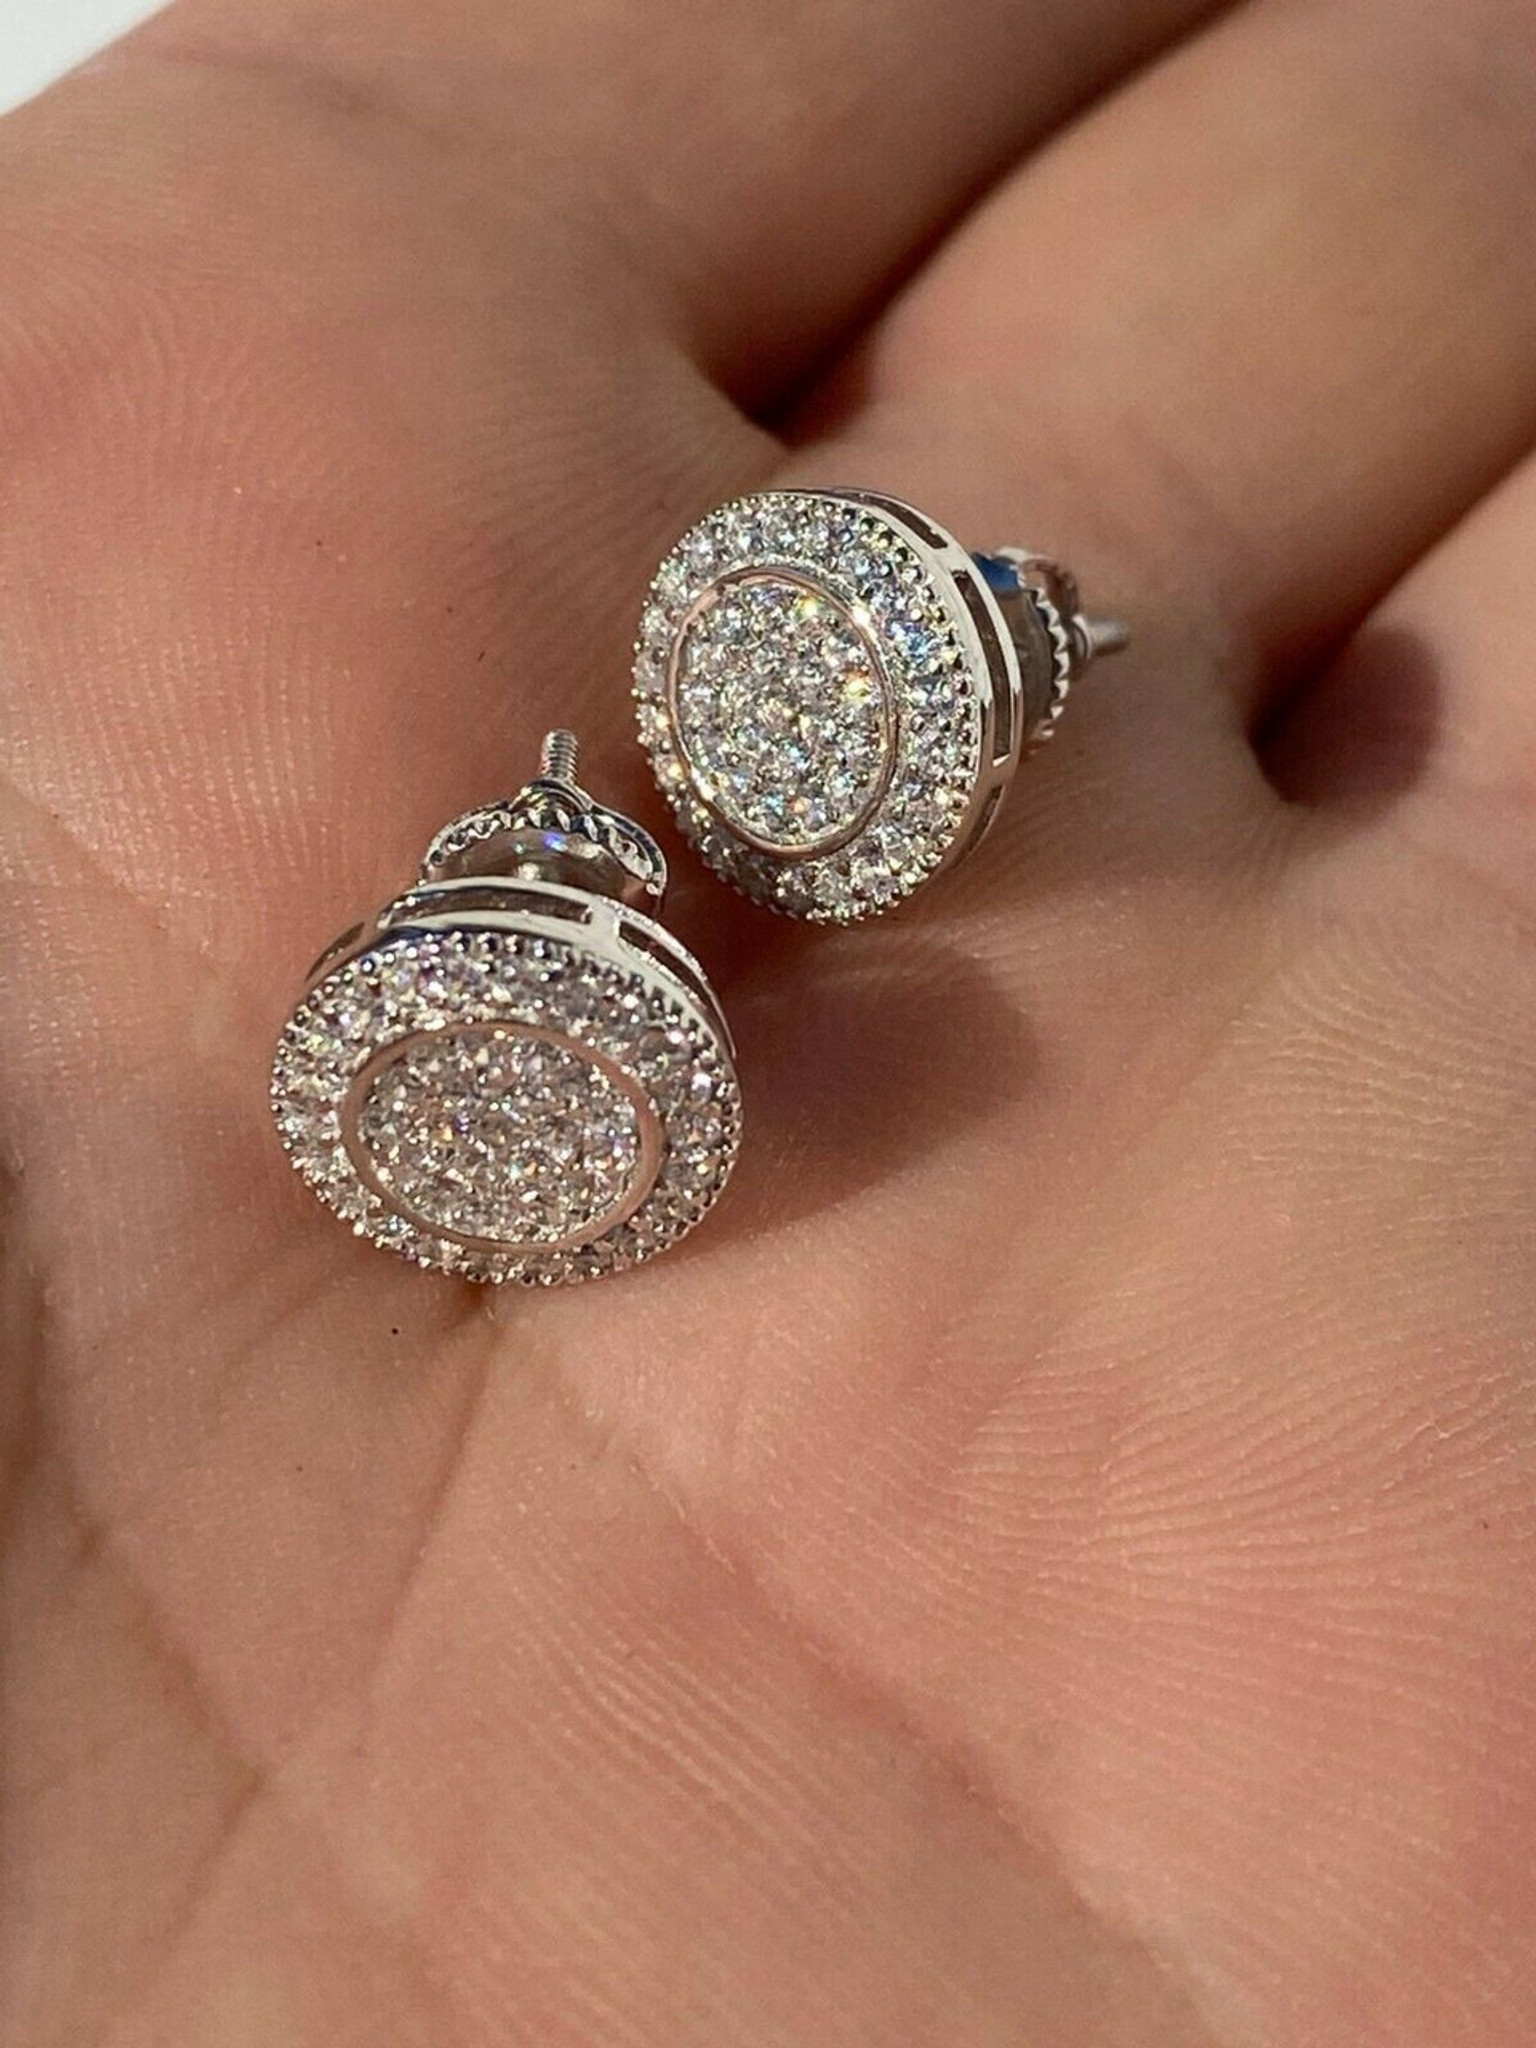 Mens Silver Earrings Stainless Steel Silver 3mm Mens Stud Earrings Studs  for Men Mens Jewelry Gifts Earring Sets by Twistedpendant 